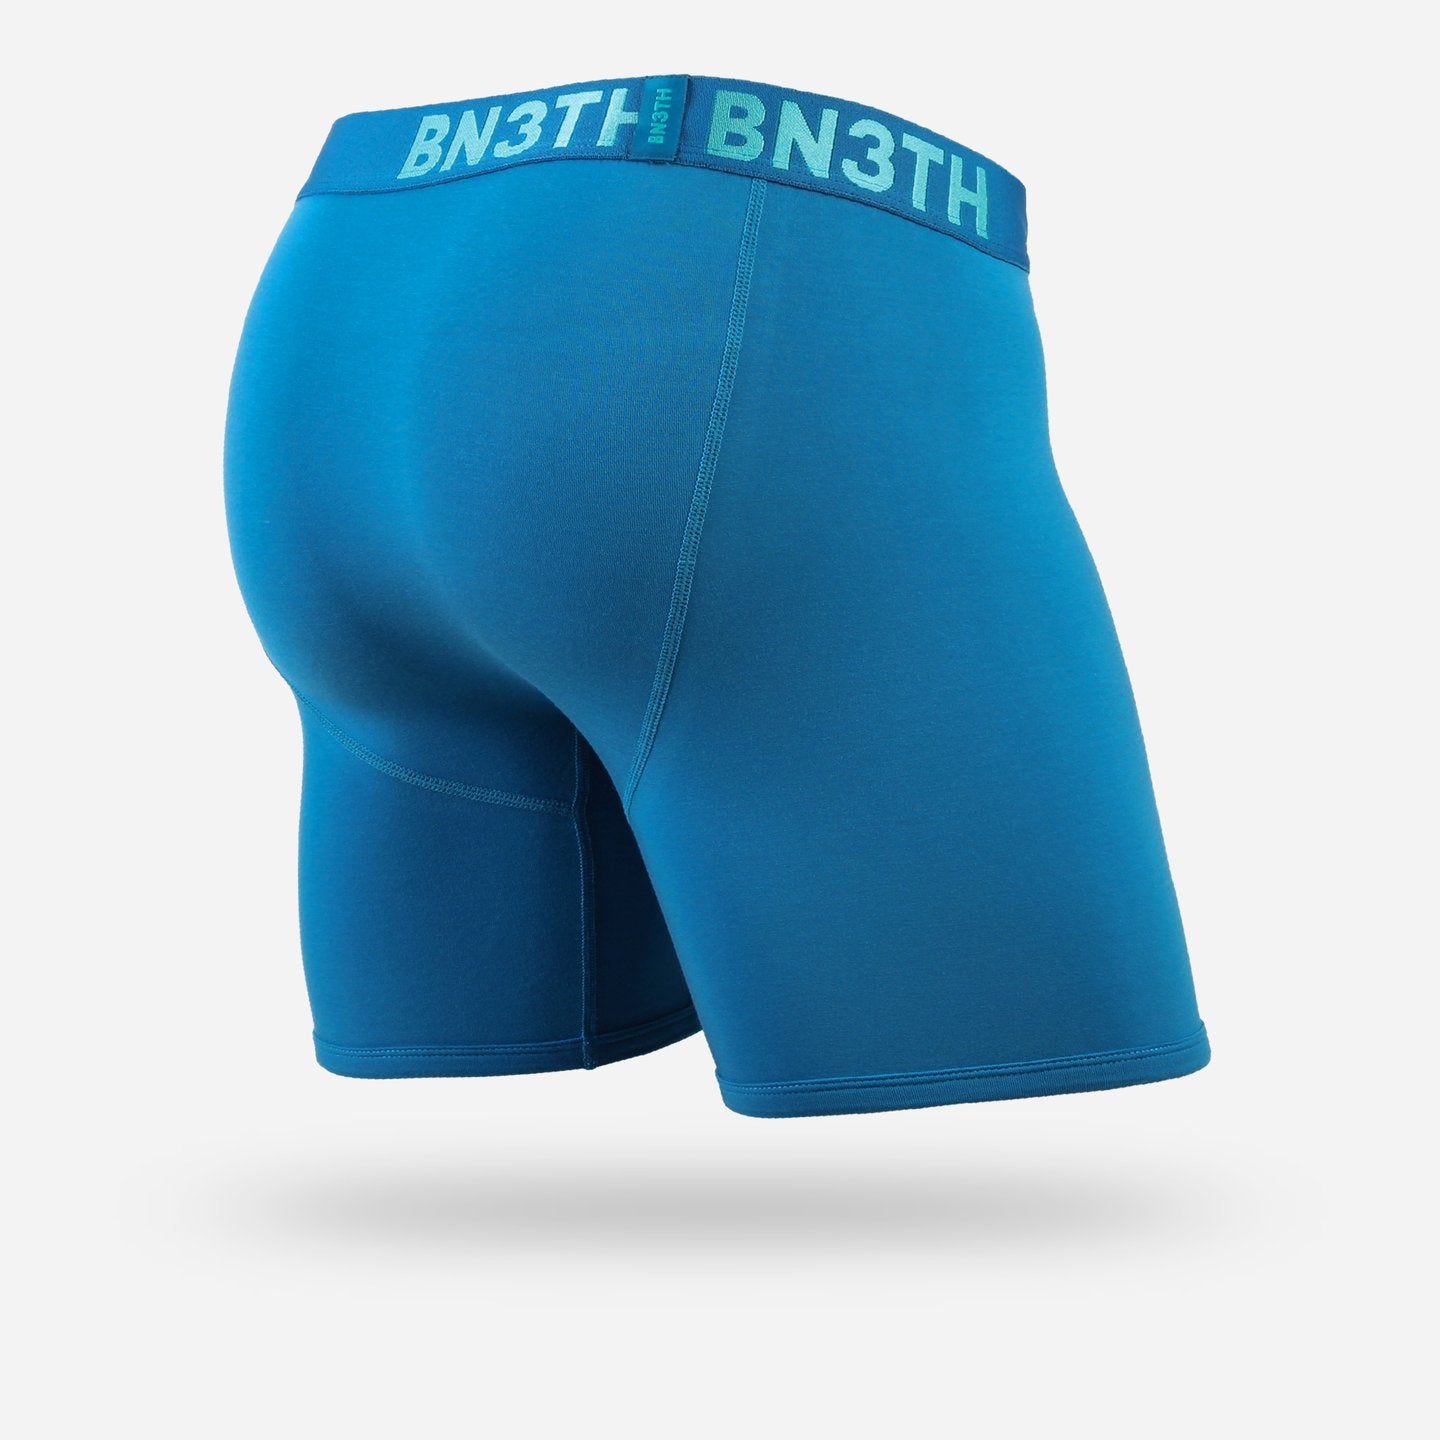 BN3TH Men's Classics Boxer Brief - Solids